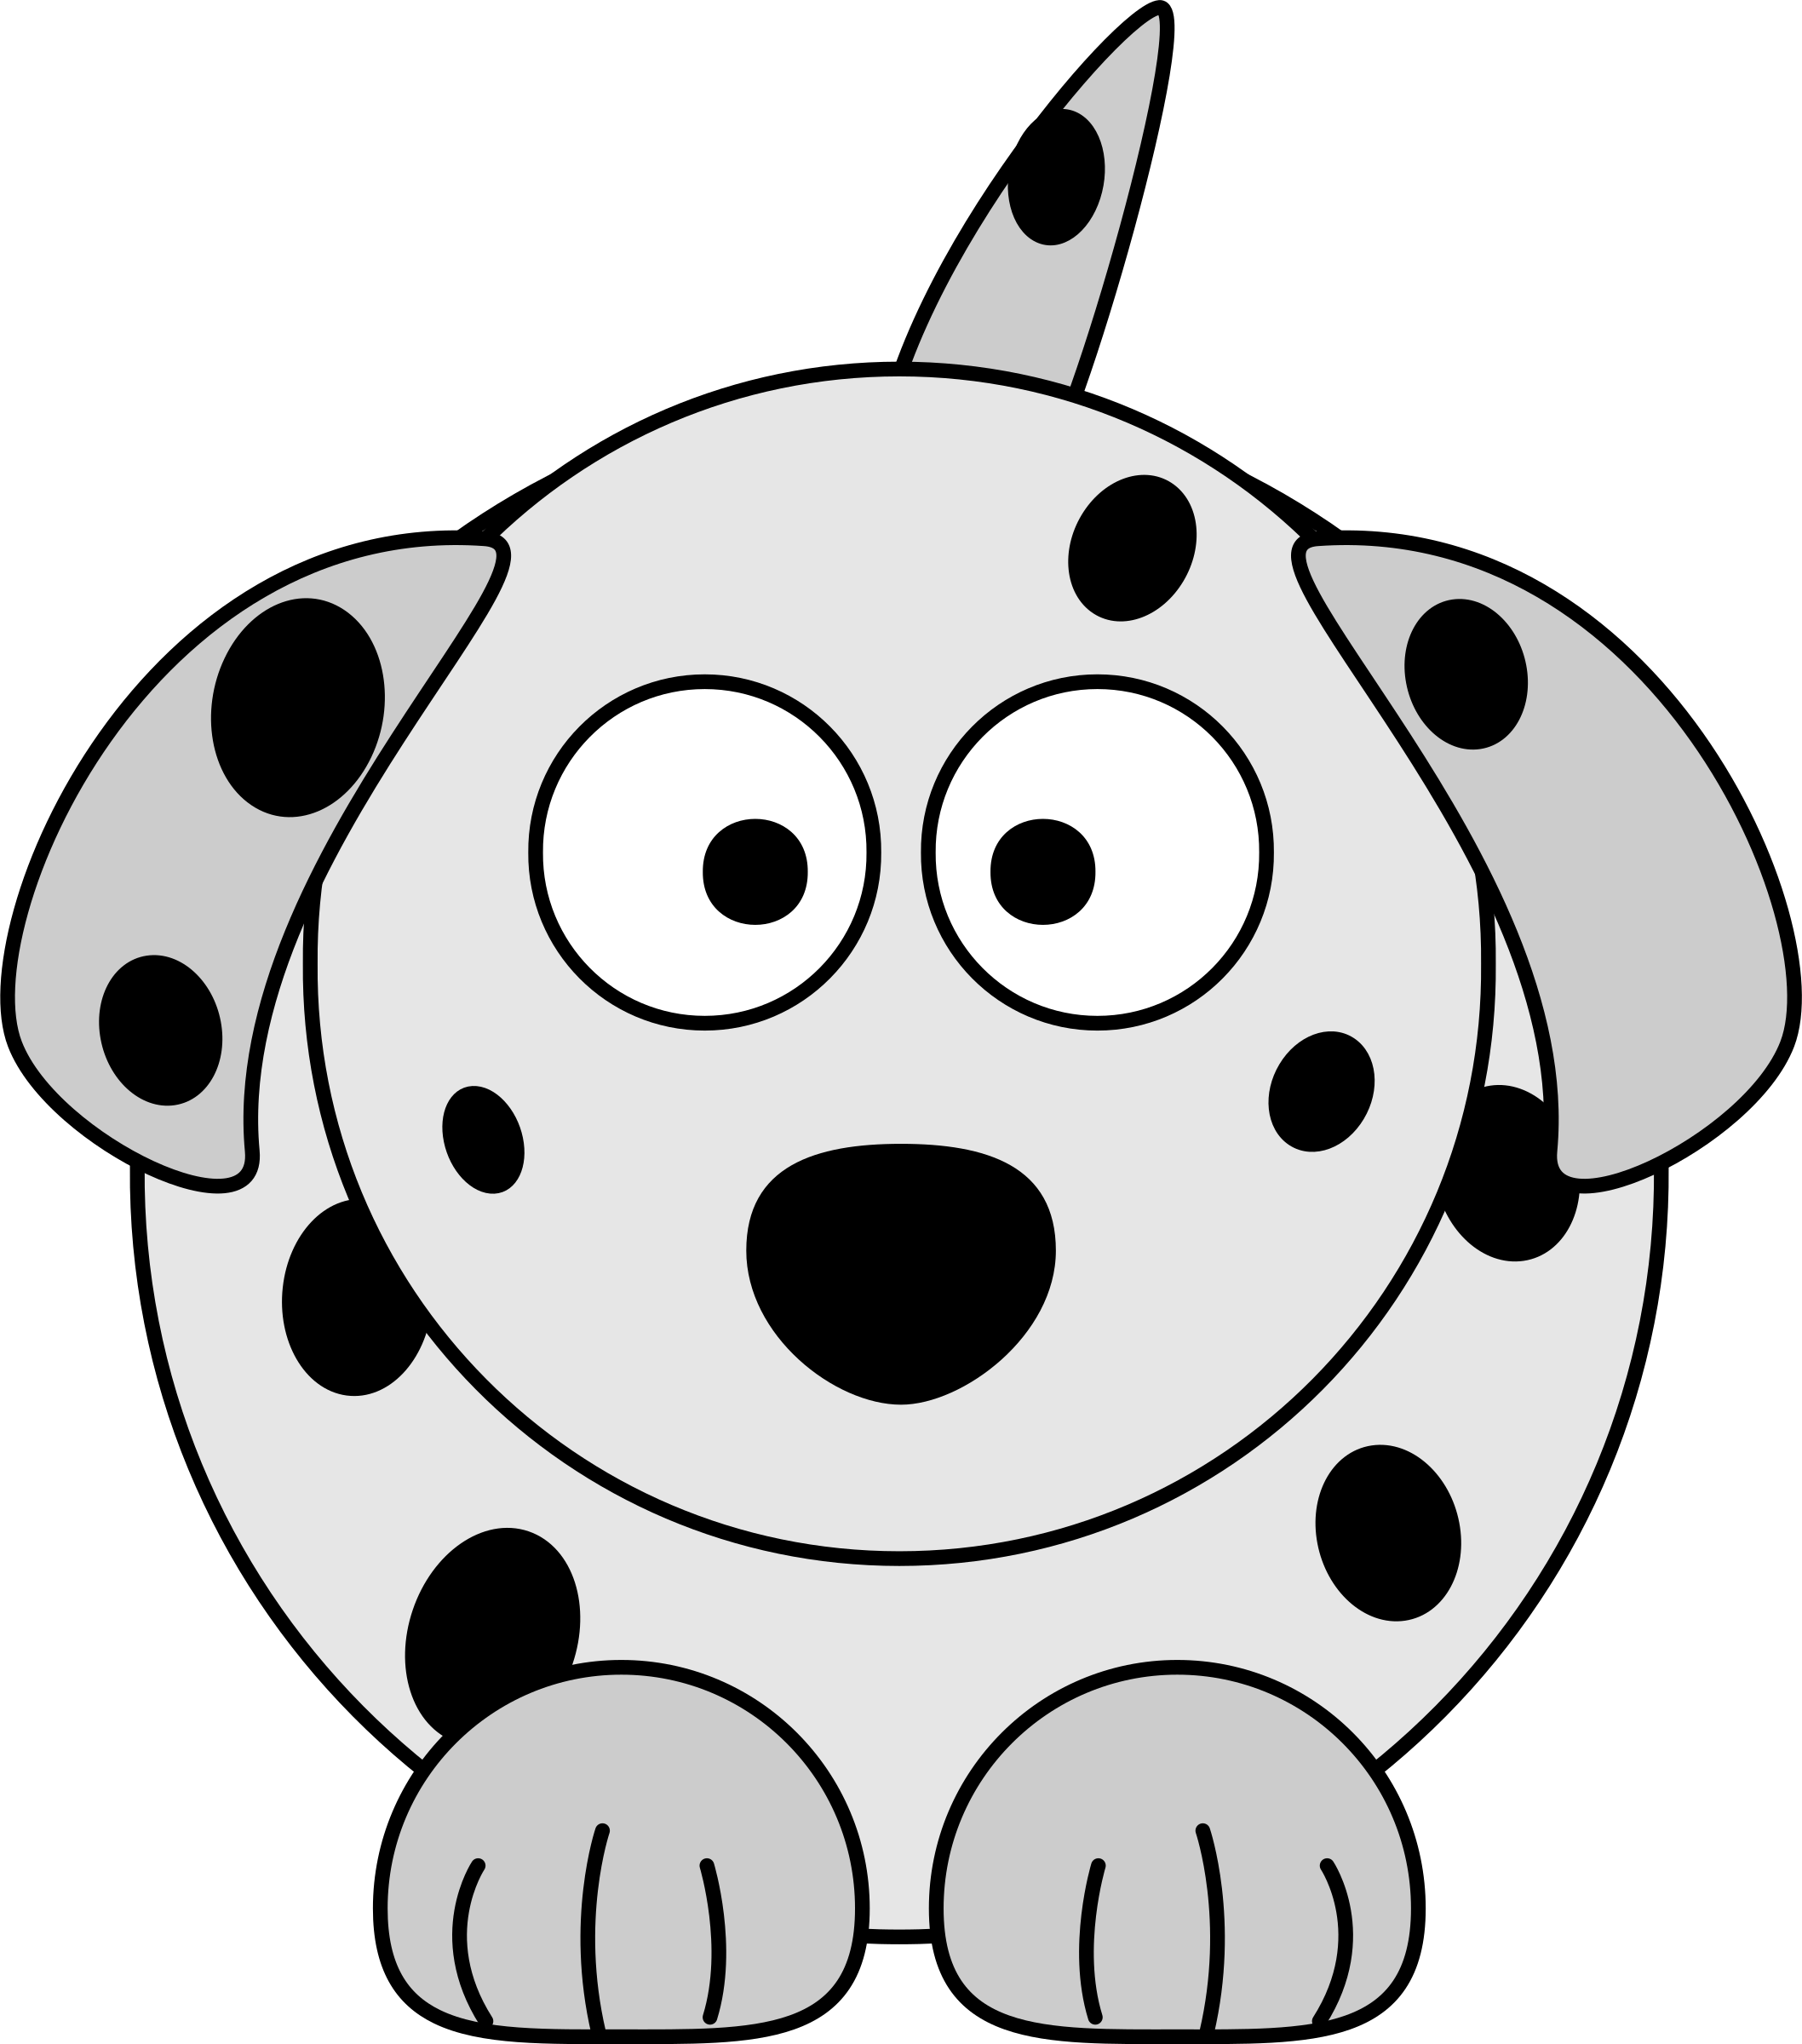 Dogs clipart colour. Dalmatian cartoon dog big